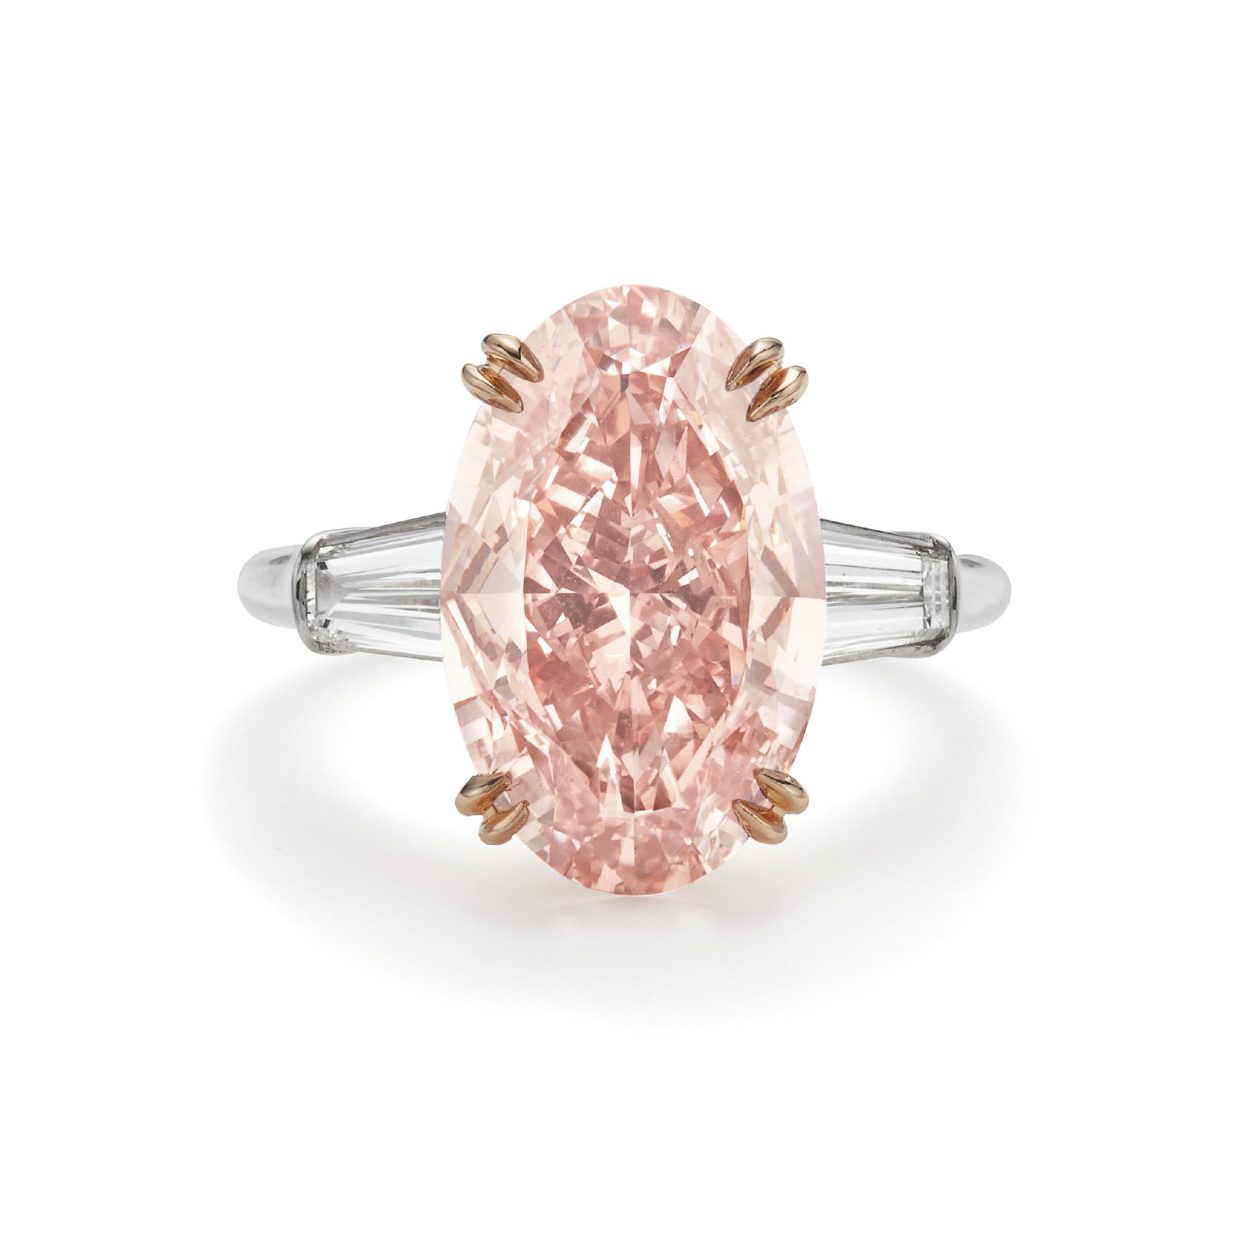 Phillips Sells “Impressive” Pink Diamond In New York Auction